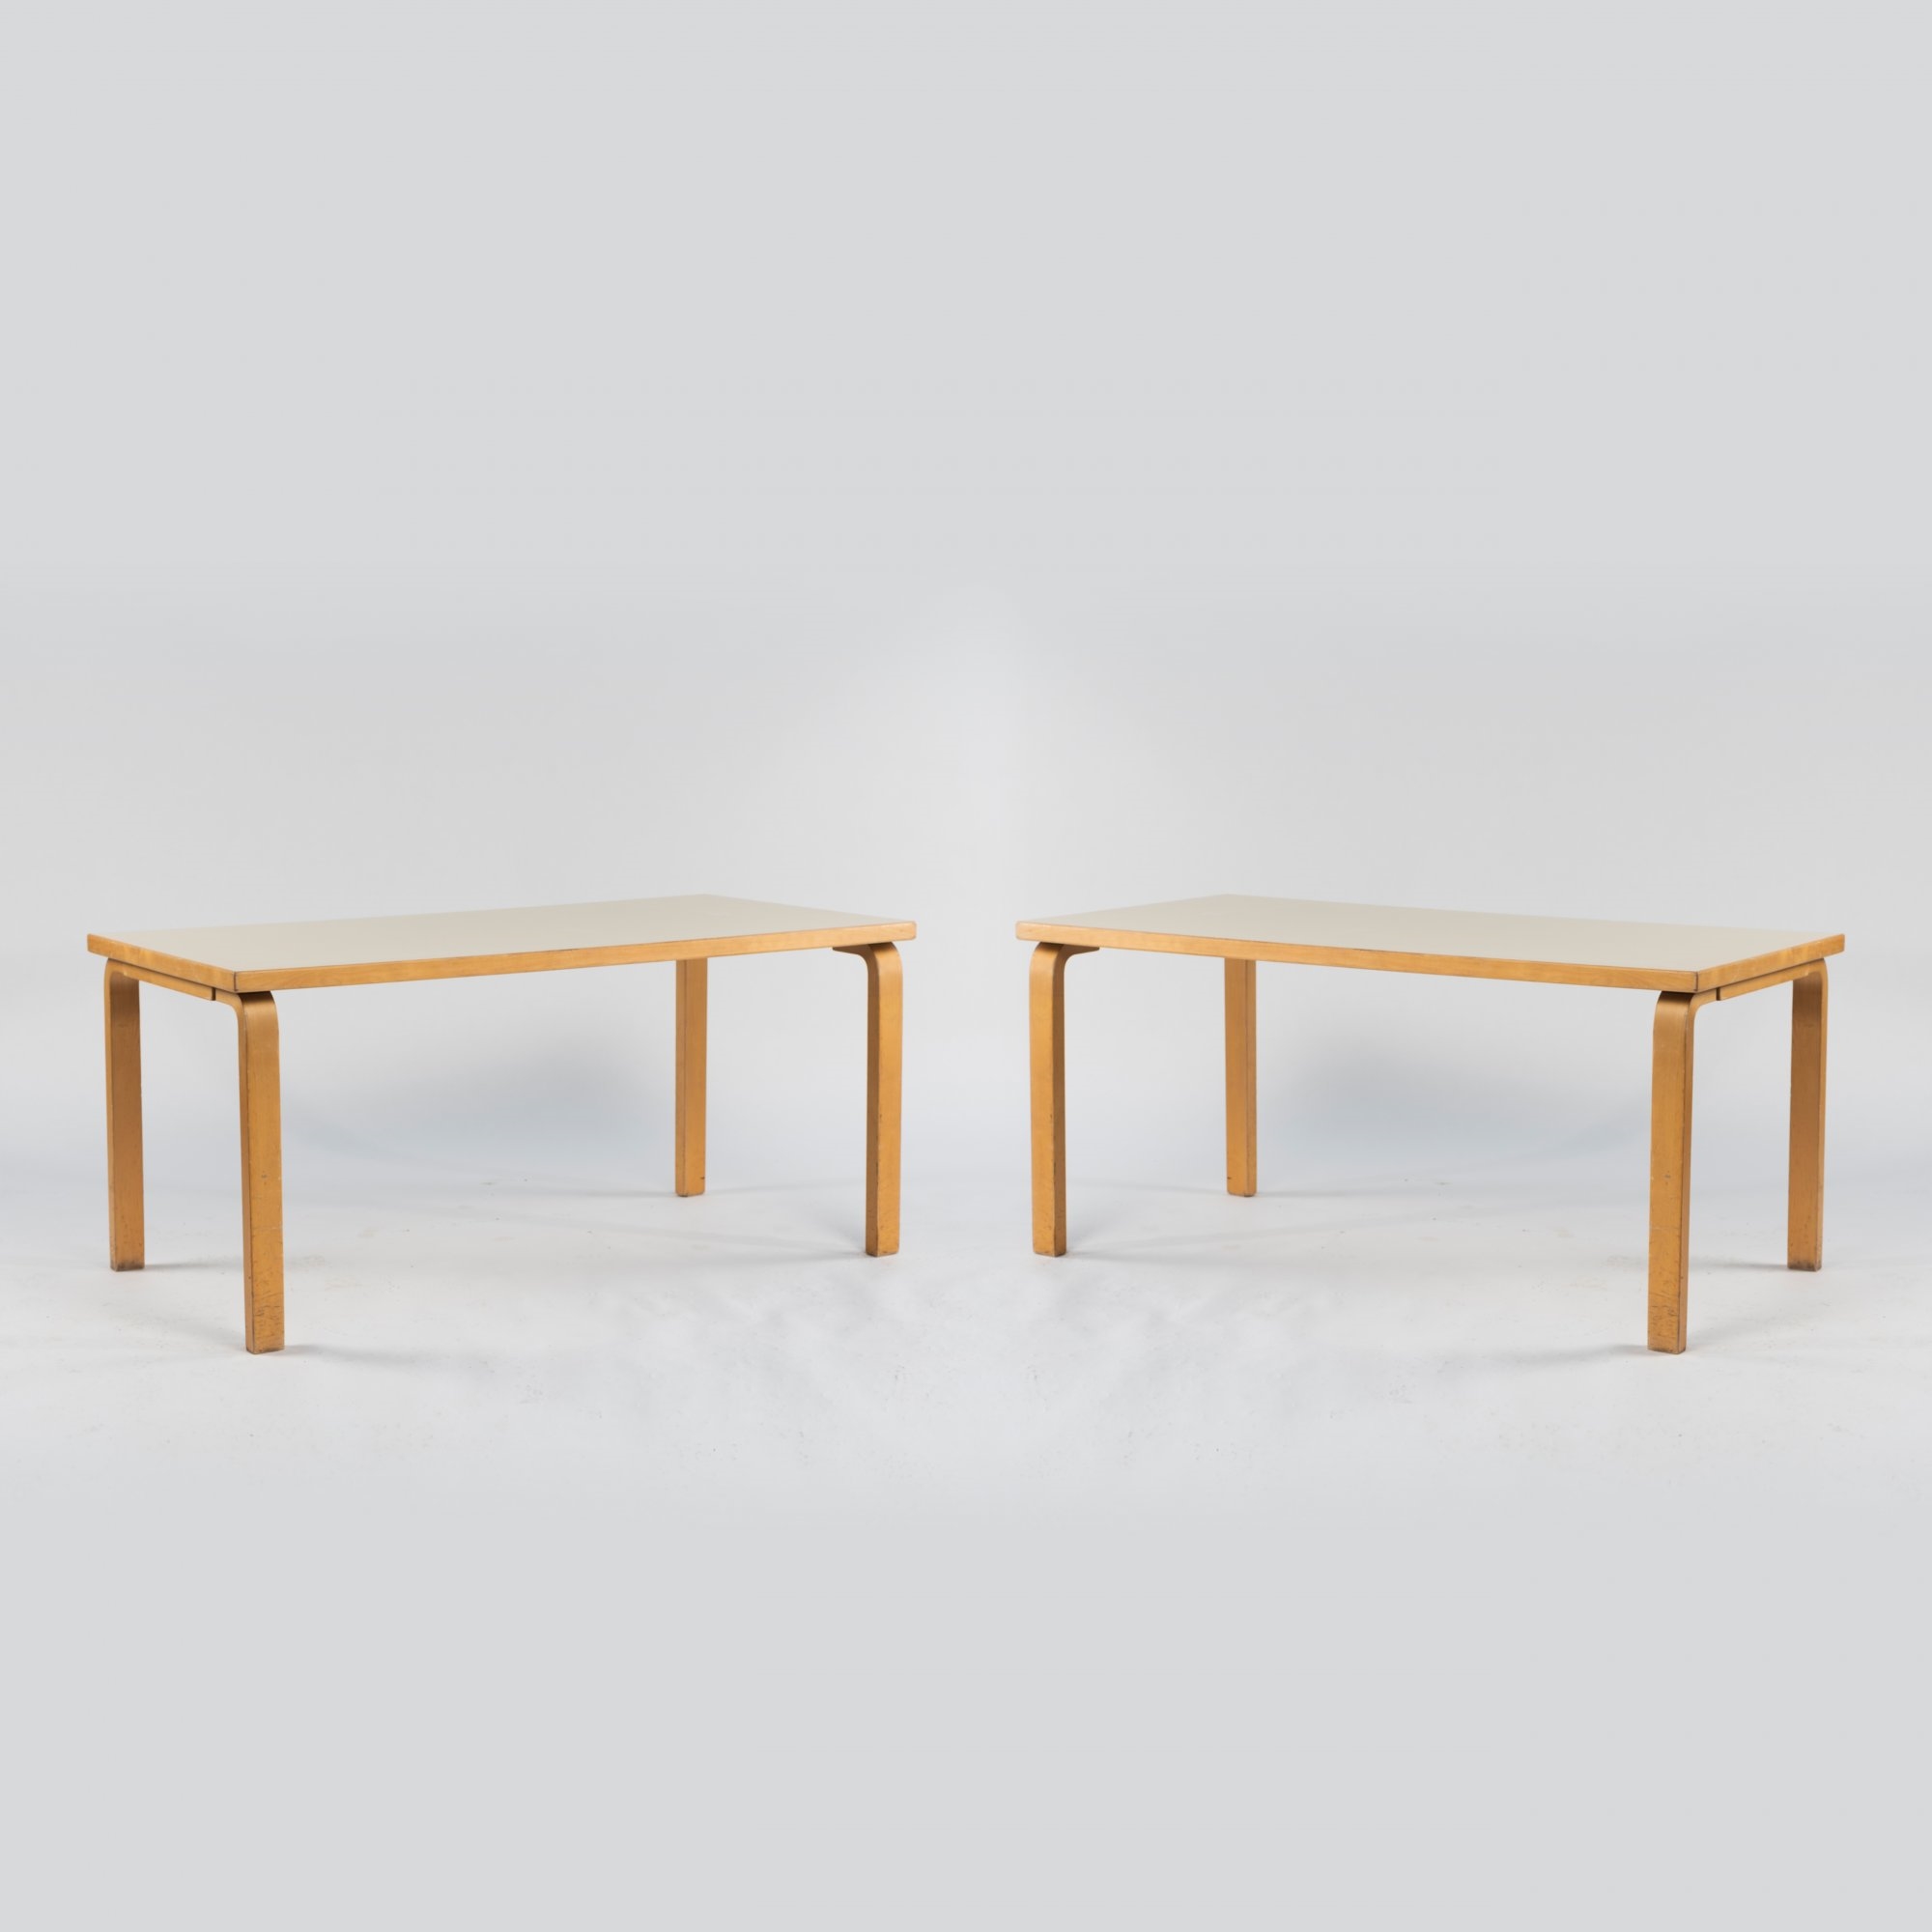 Artek Aalto table 100x60 cm, birch - yellow